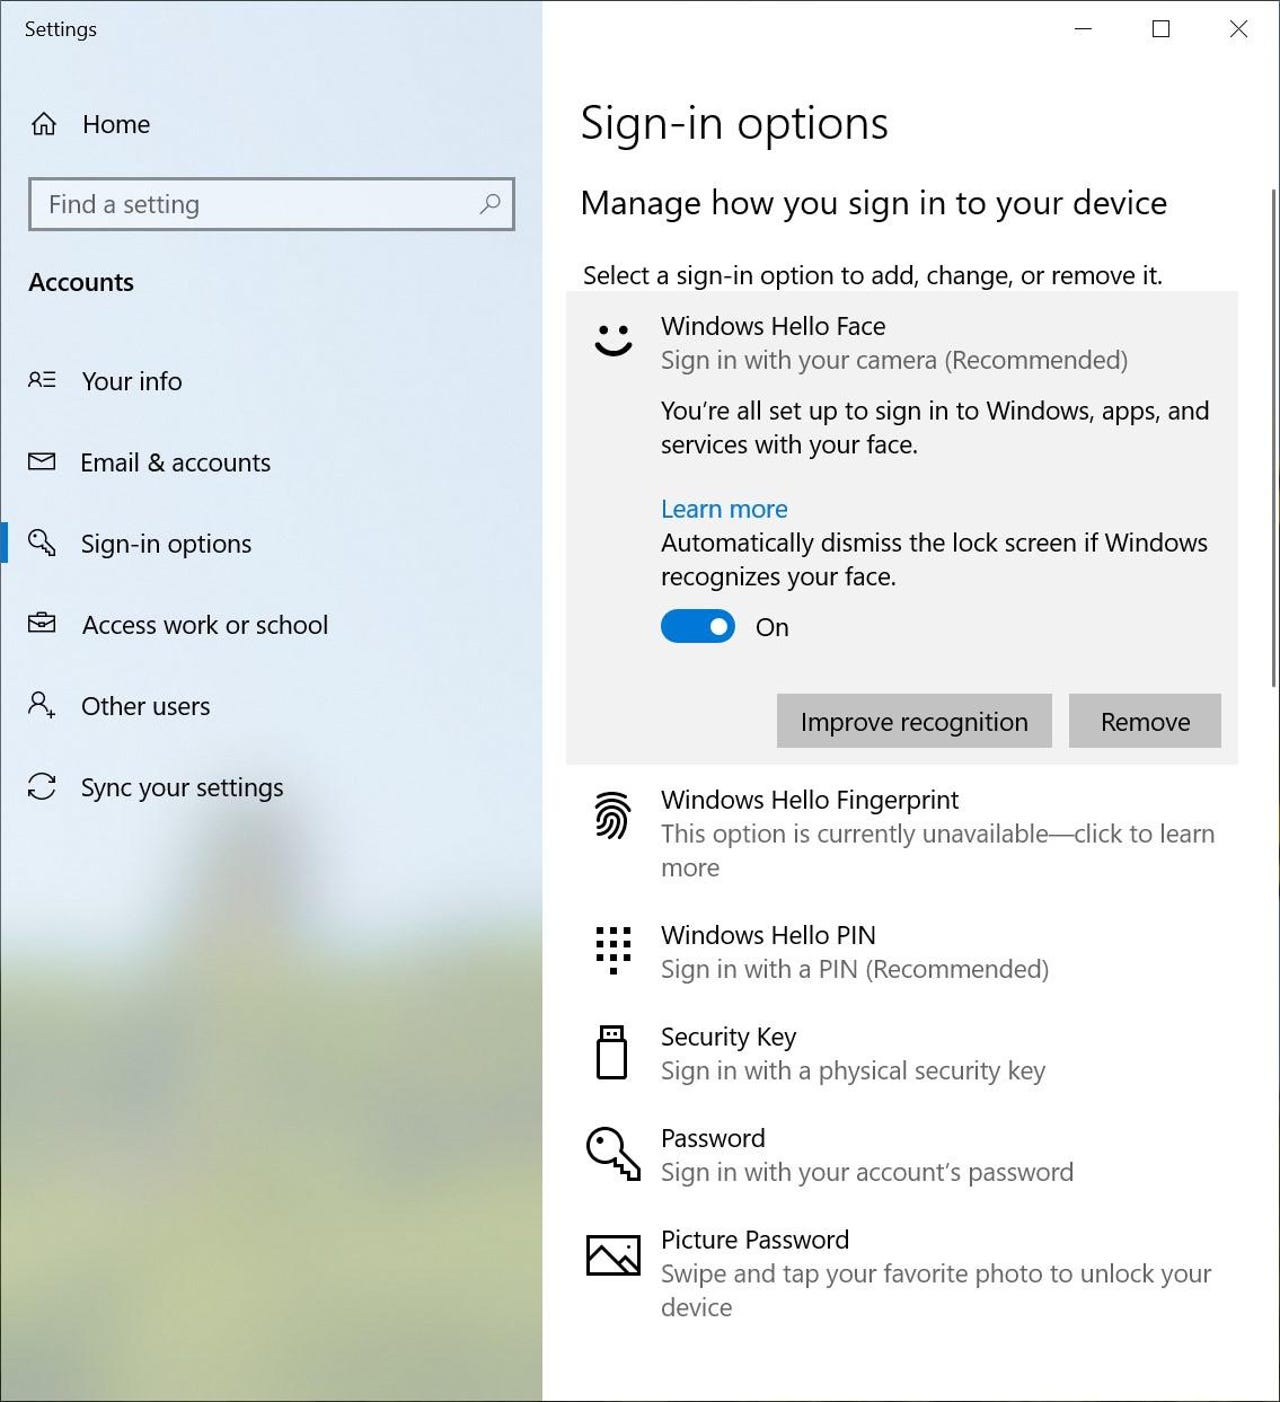 06-windows-hello-account-sign-in-options.jpg